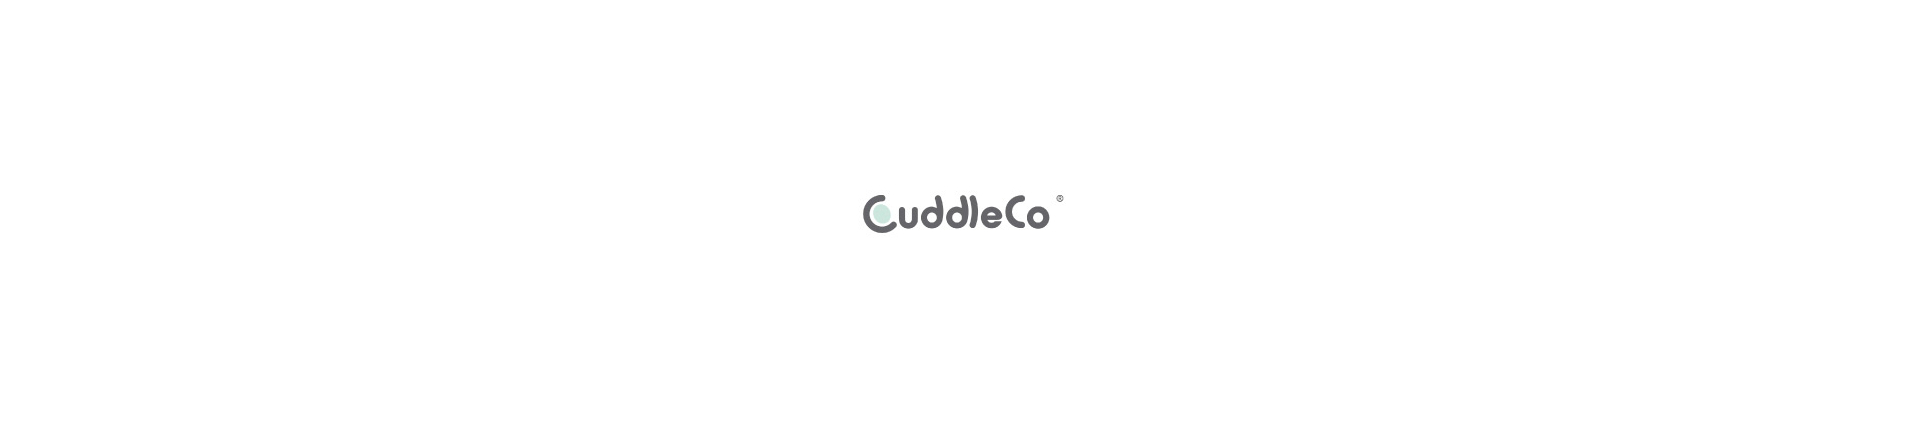 CuddleCo®